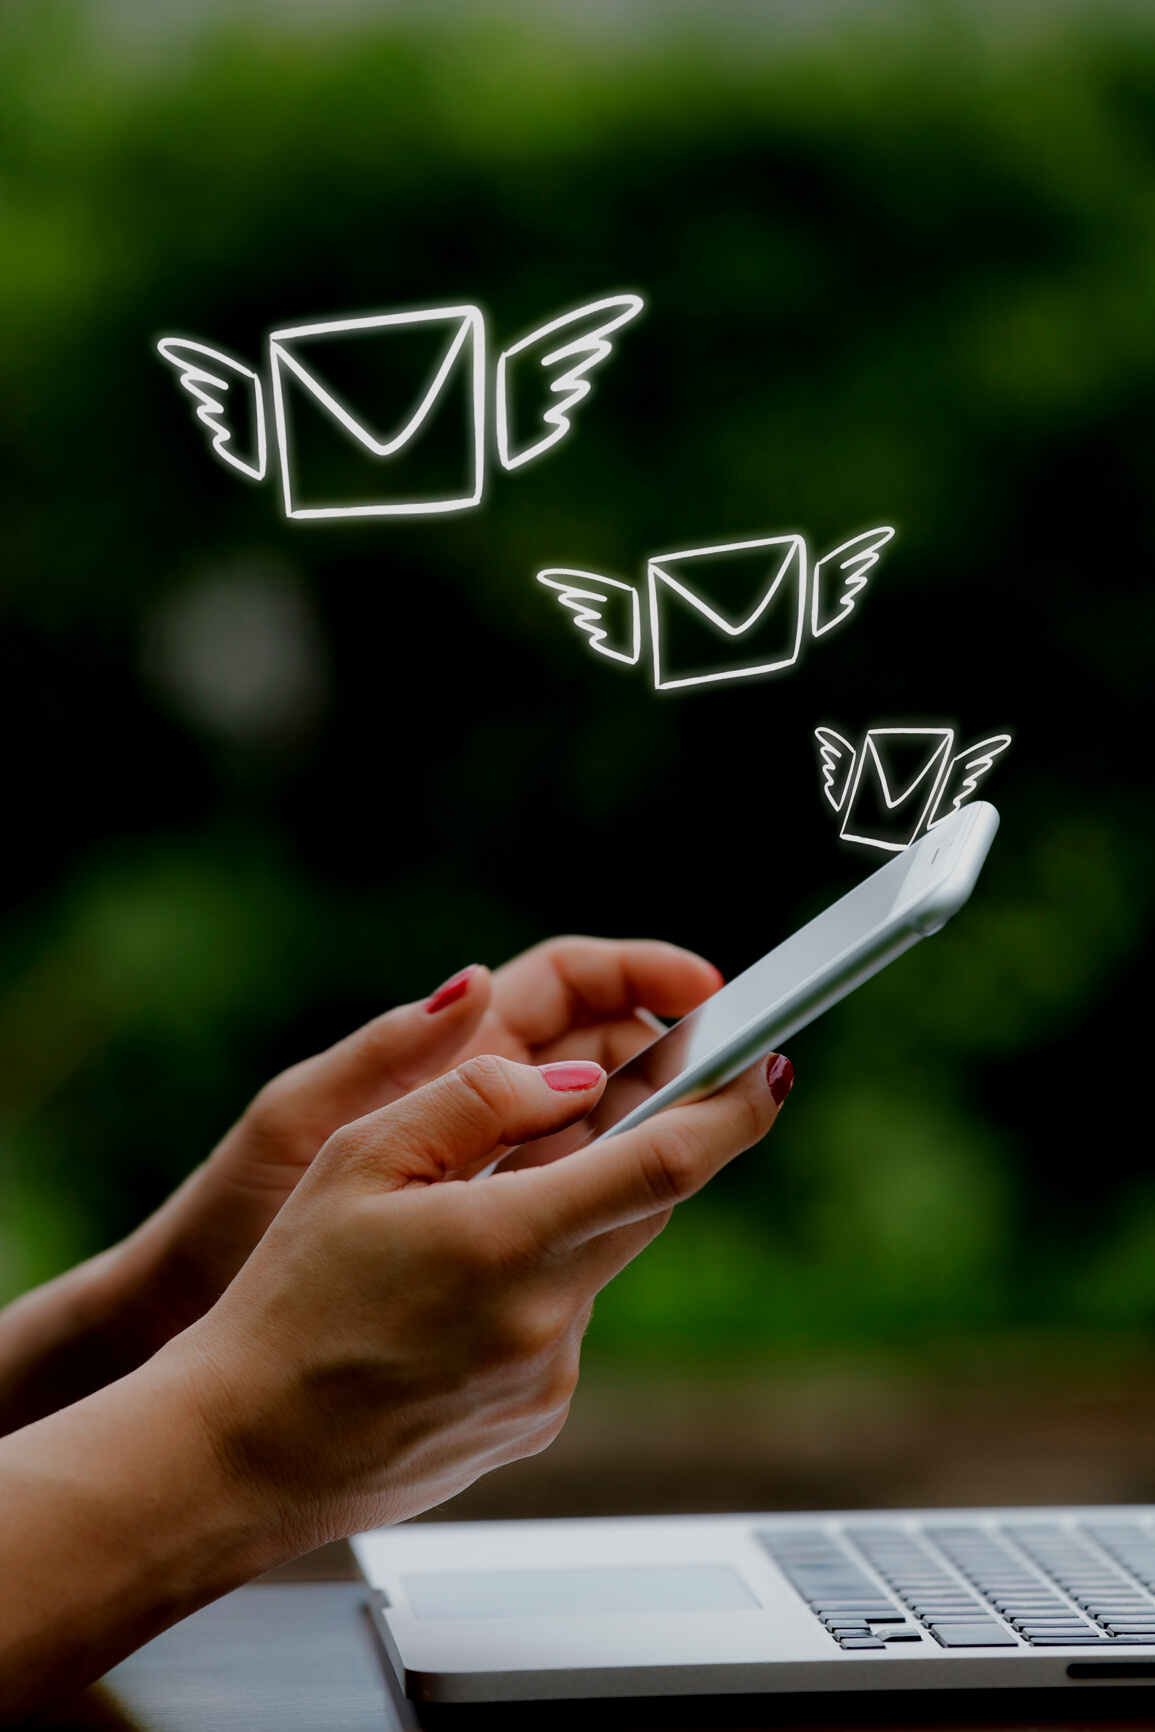 E-mail Marketing with a communication via mobile hotspot